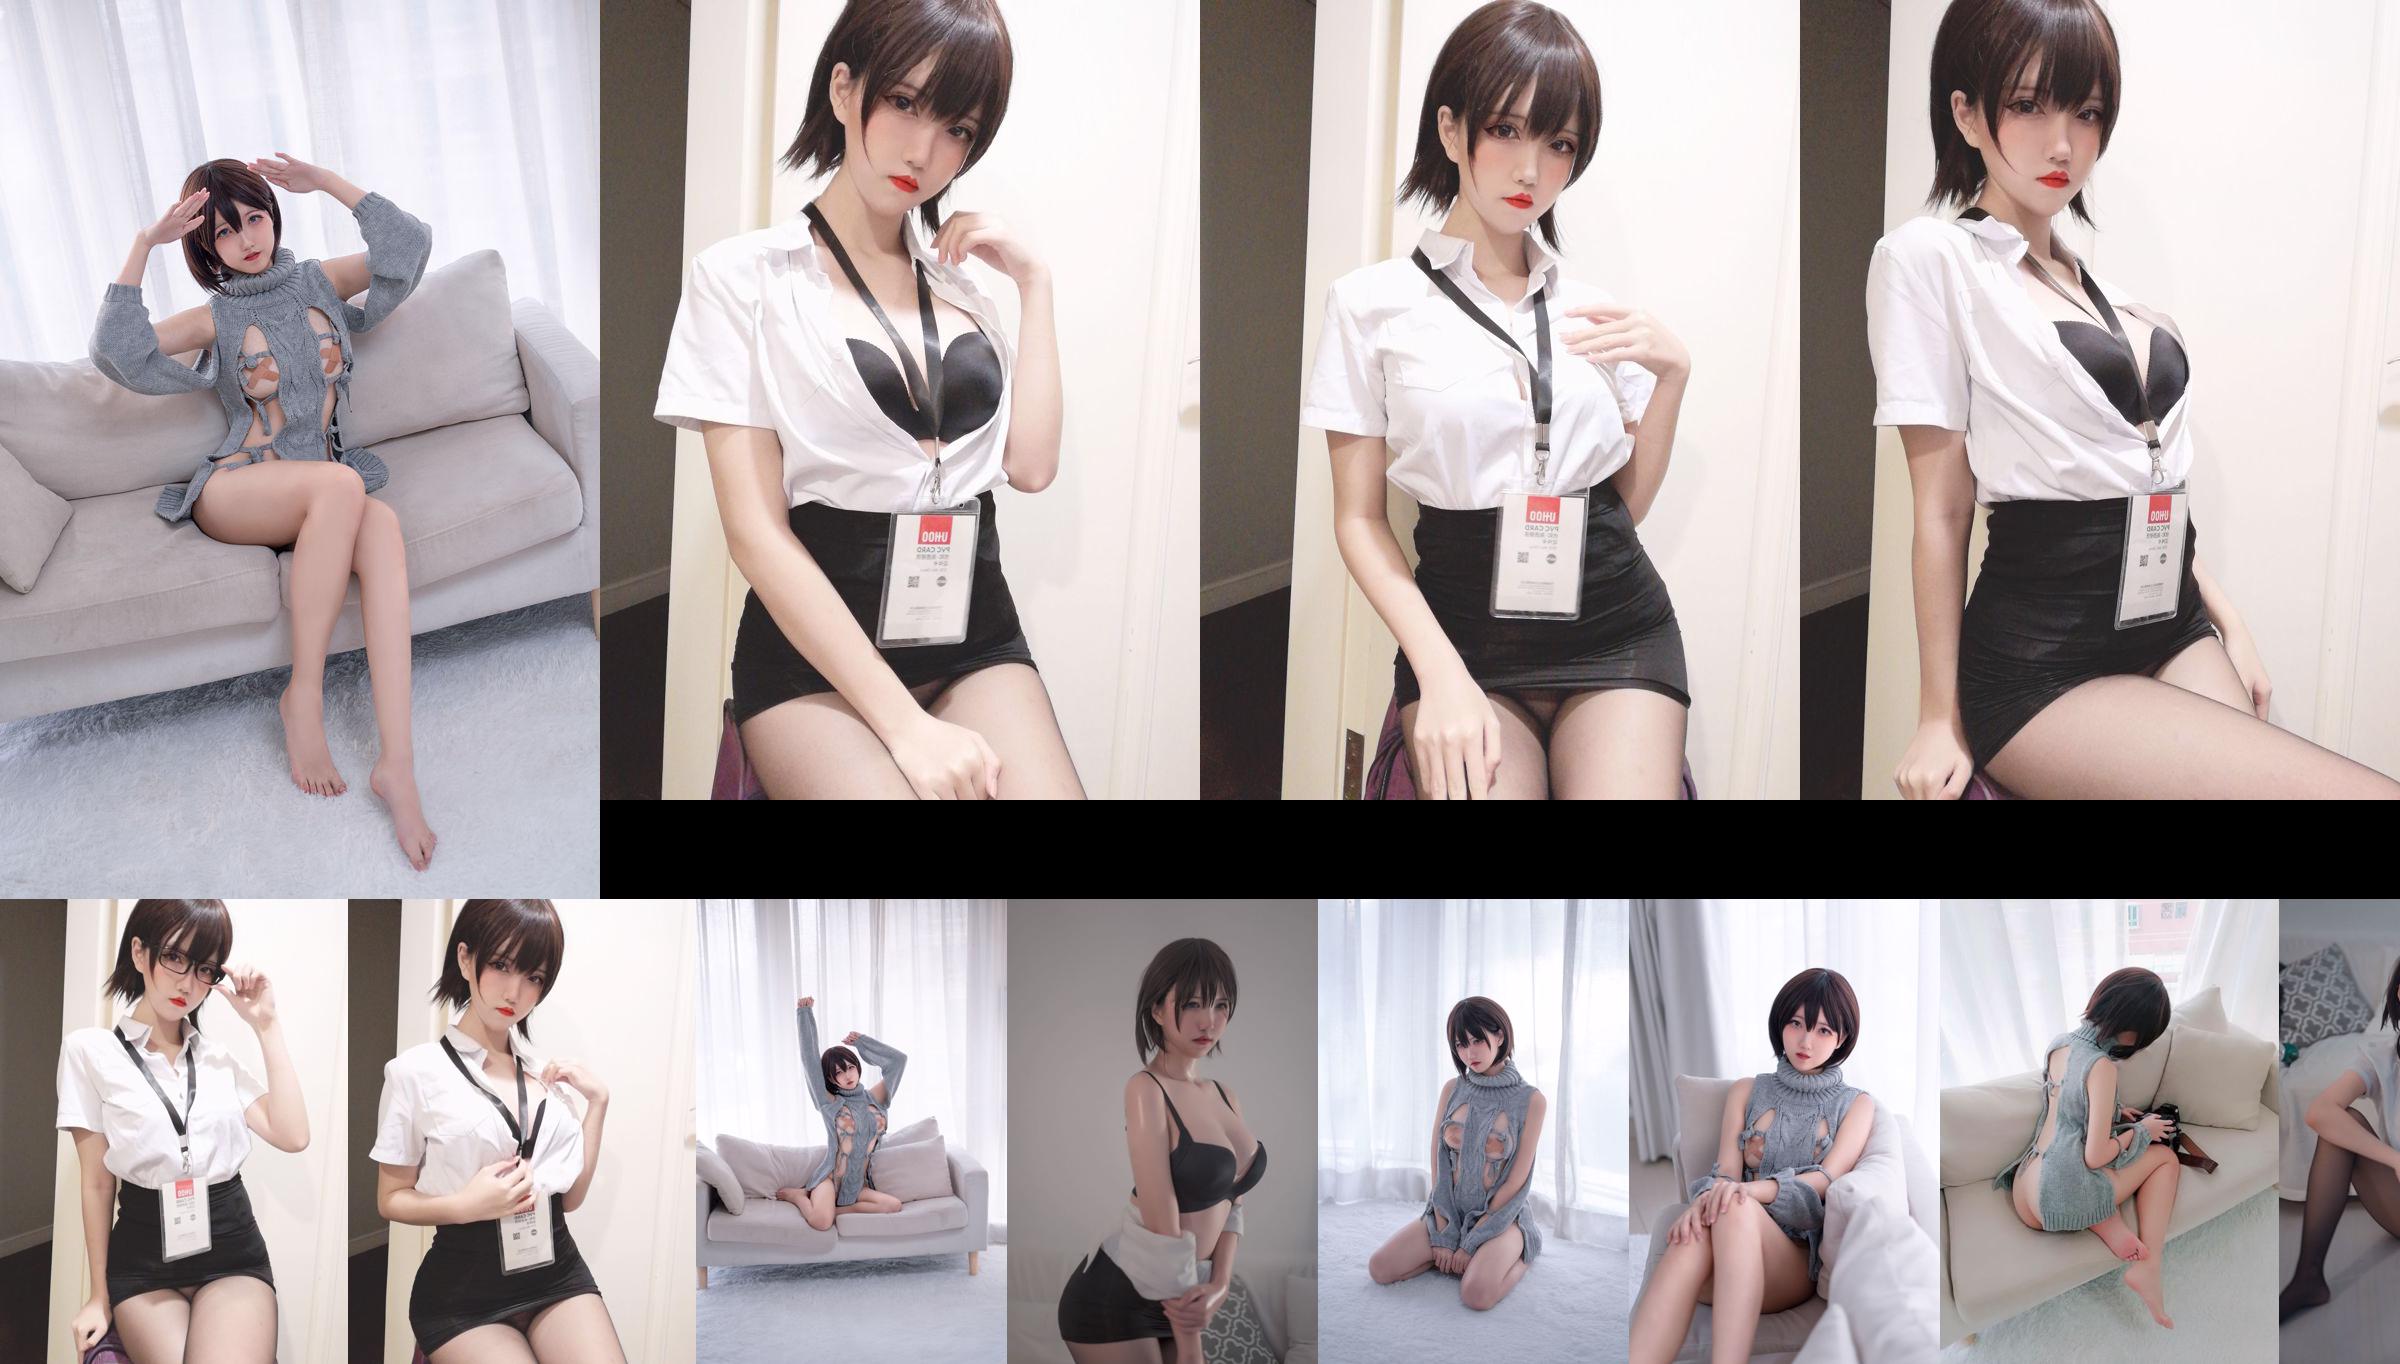 [Internet celebrity COSER photo] Ghostly girl A Xun kaOri - uniform No.3868d6 Page 1